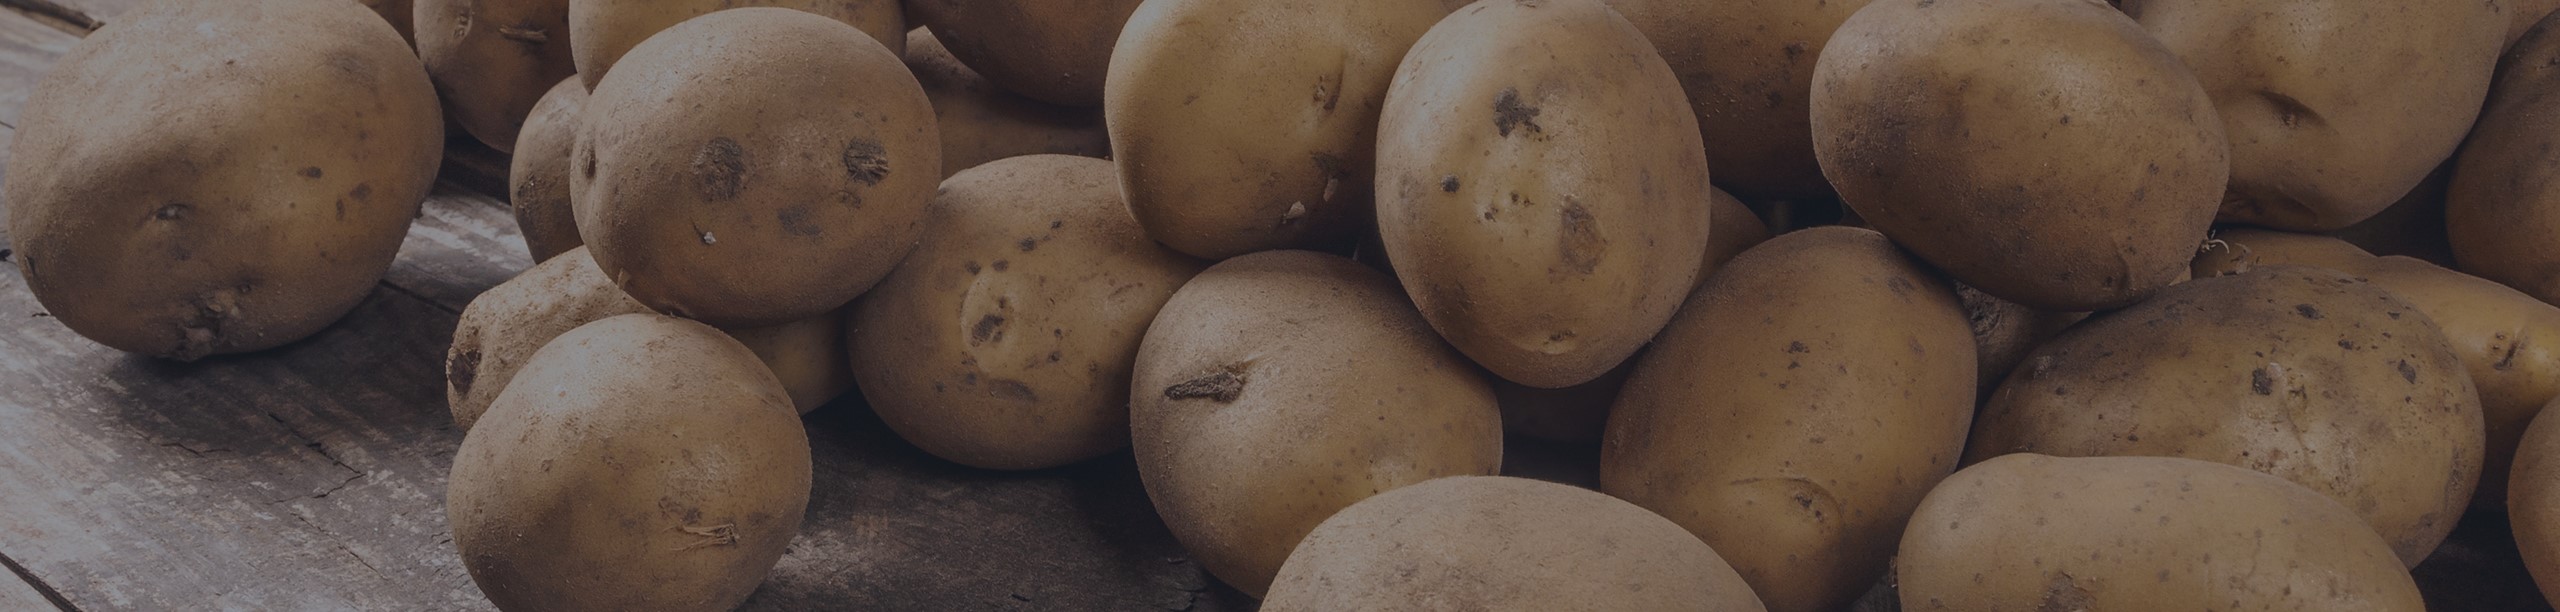 potato market update